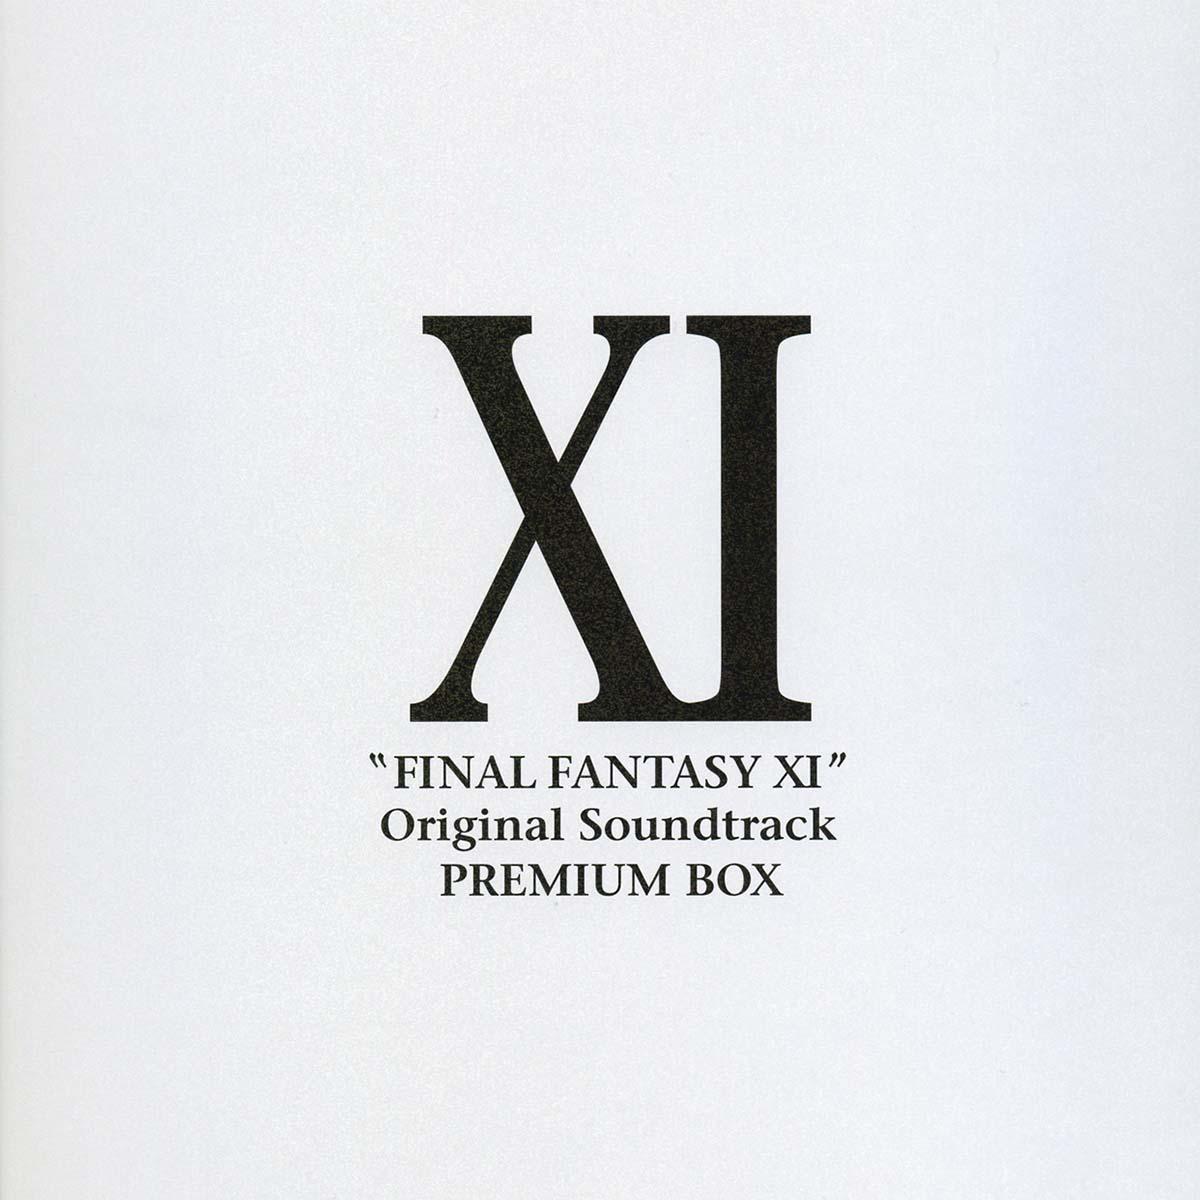 Final Fantasy XI Original Soundtrack PREMIUM BOX